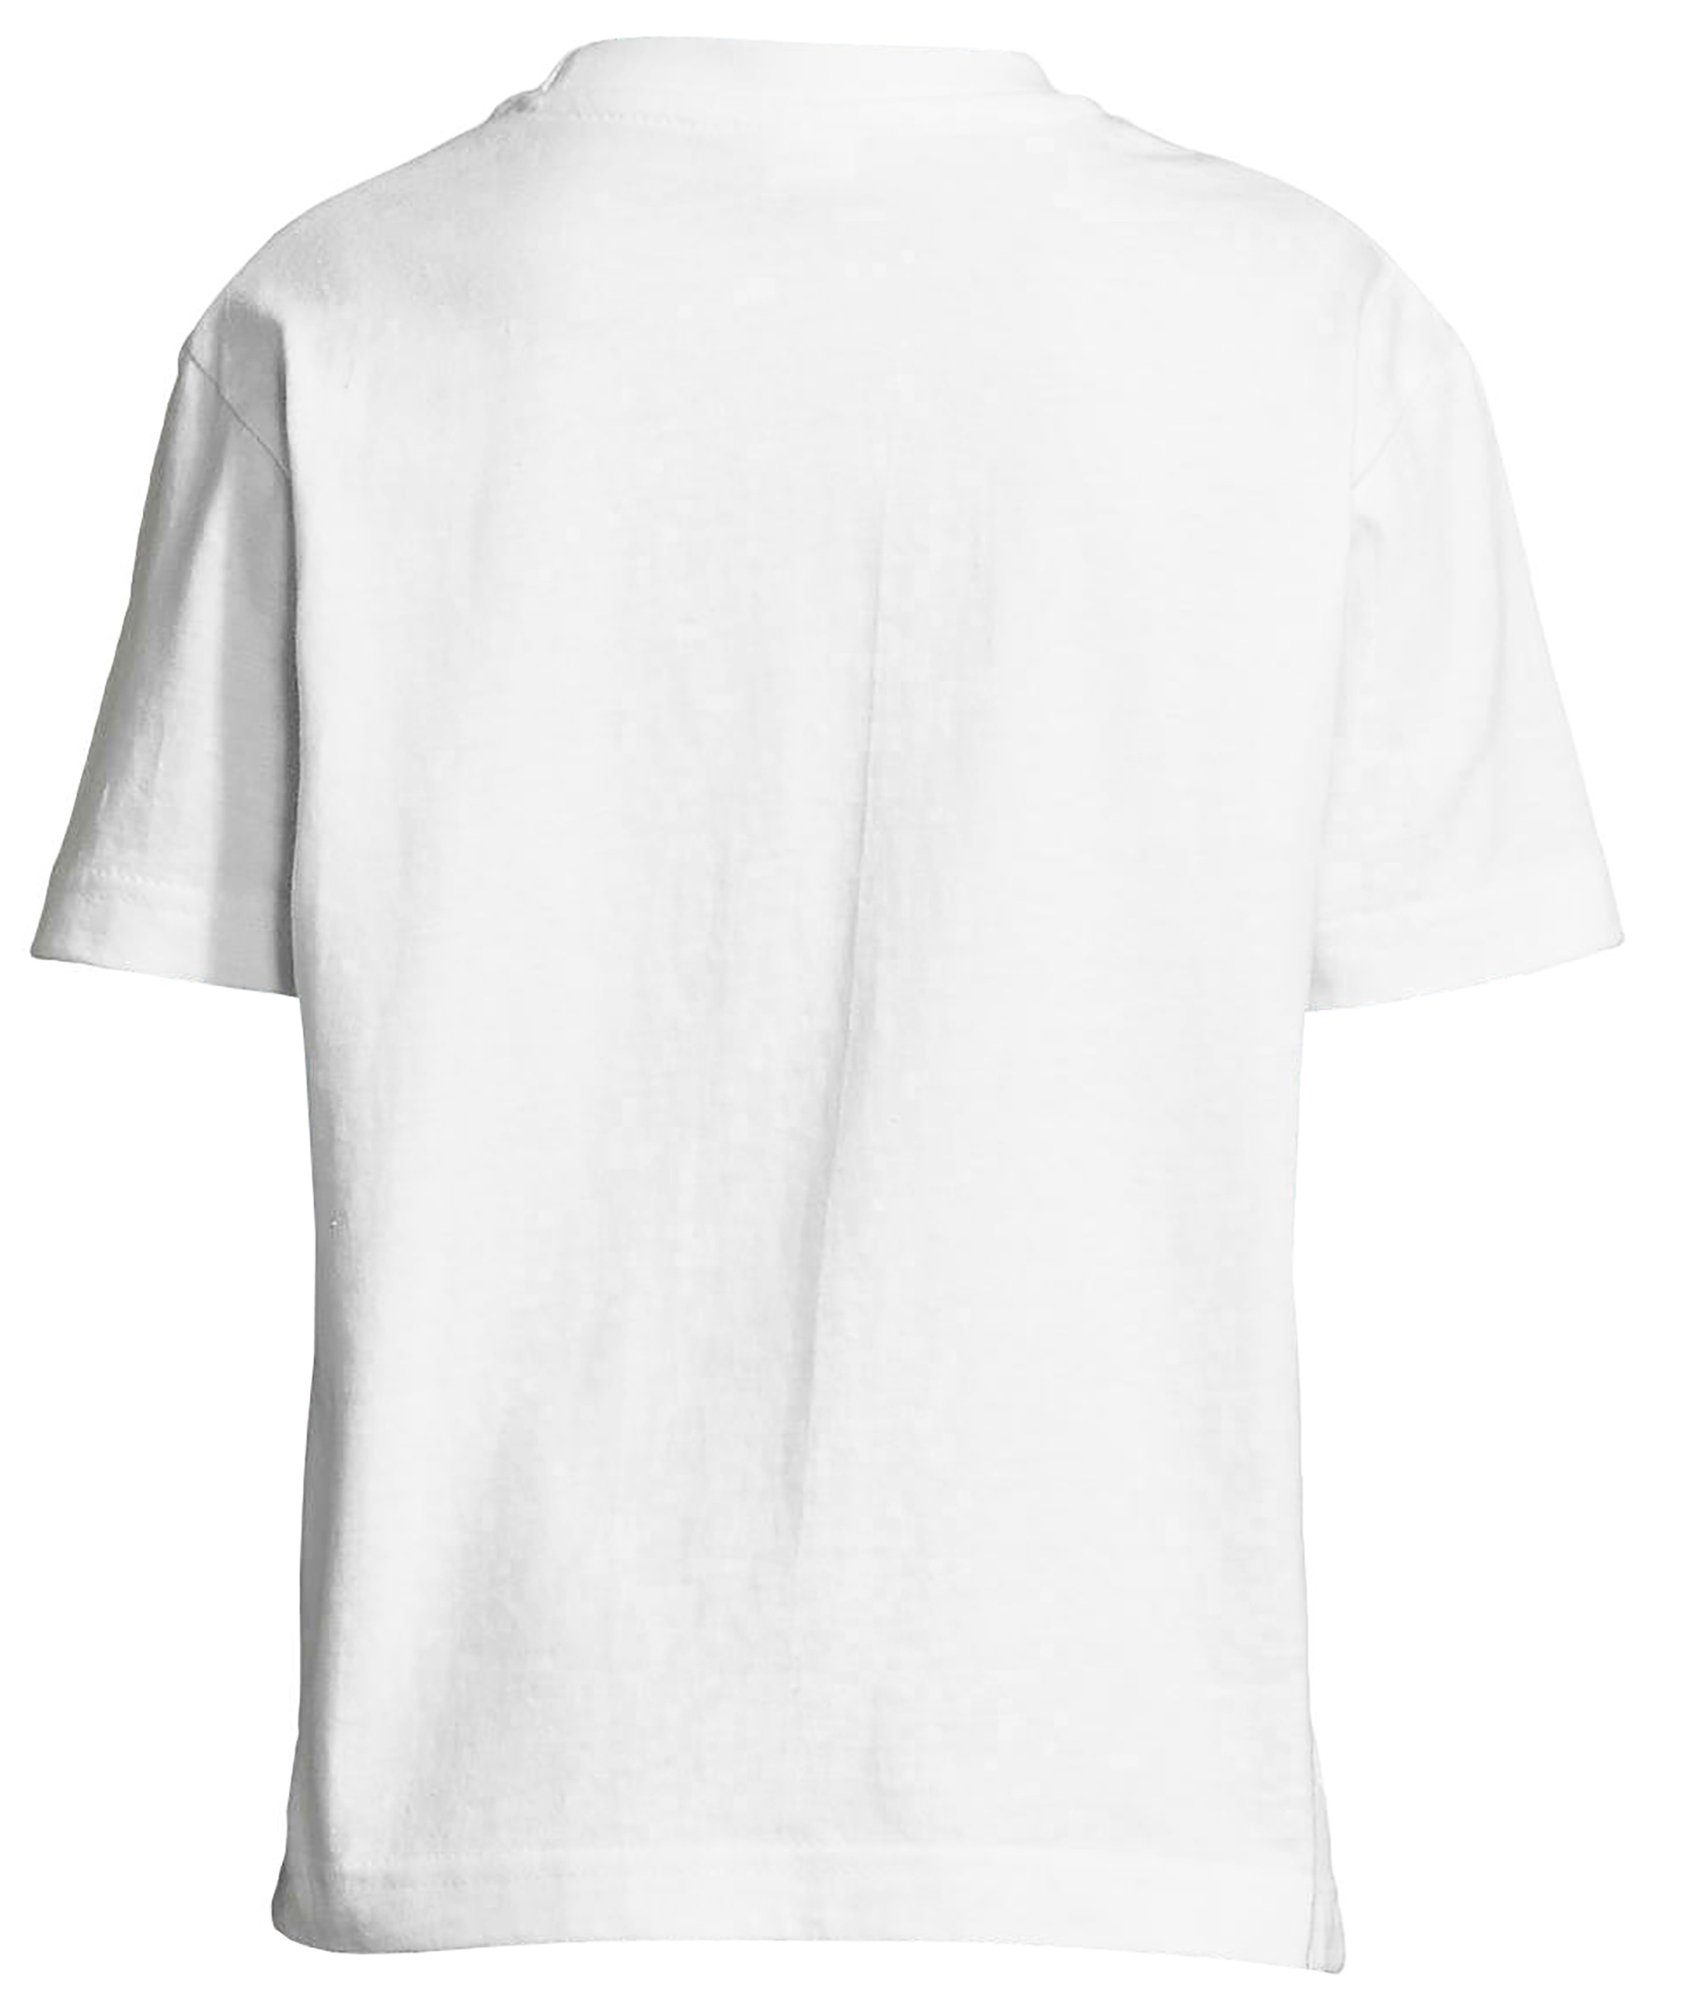 i167 Aufdruck, - Print-Shirt MyDesign24 Ölfarben bedrucktes in weiss Pferdekopf mit Mädchen Baumwollshirt T-Shirt